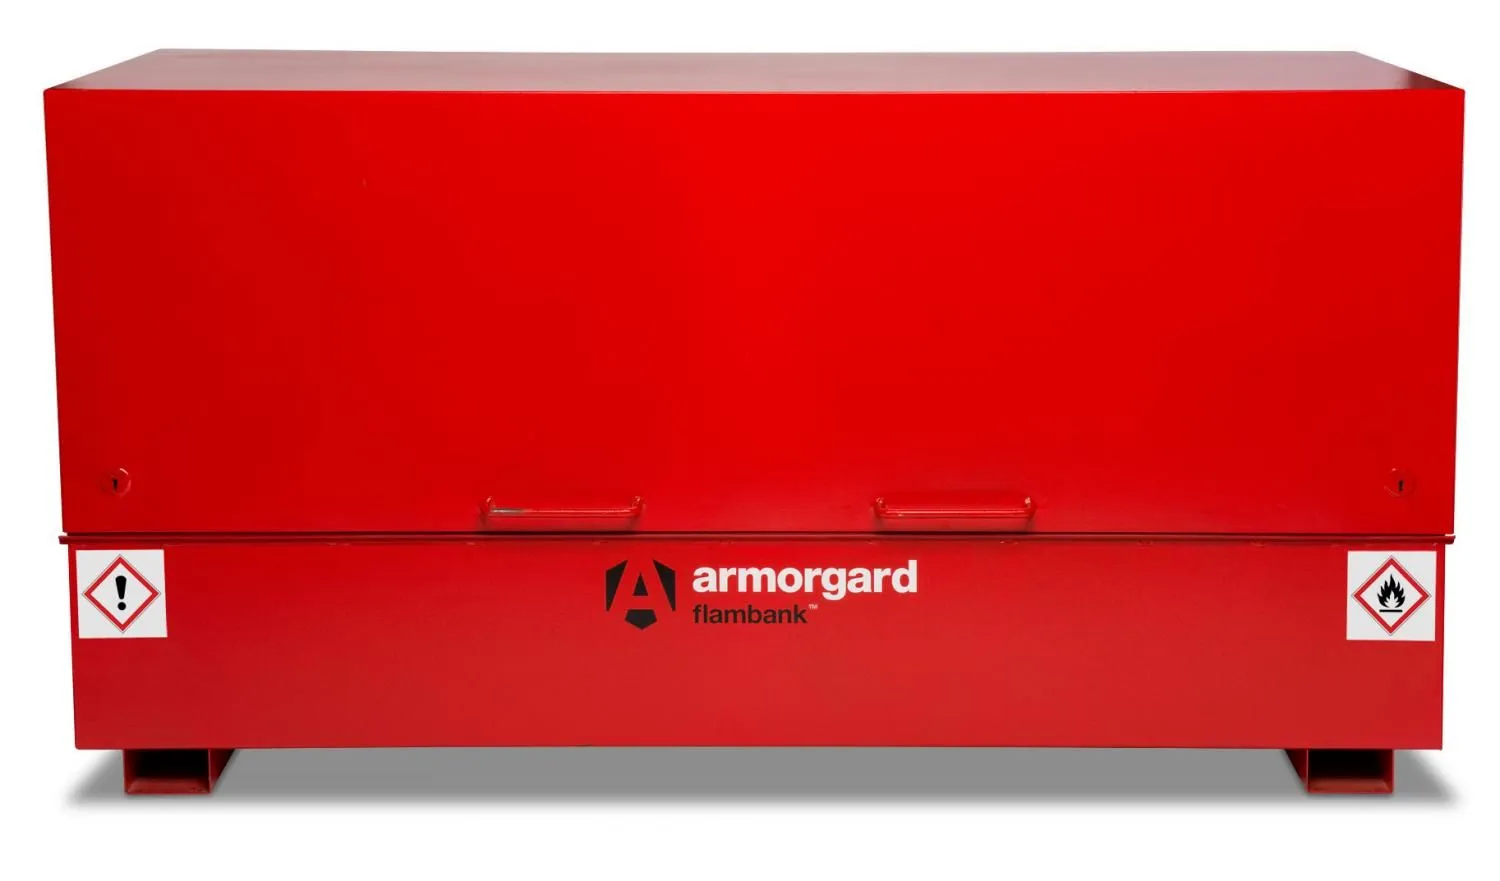 Armorgard FlamBank Hazardous Storage Chest 2370 x 985 x 1220mm Red